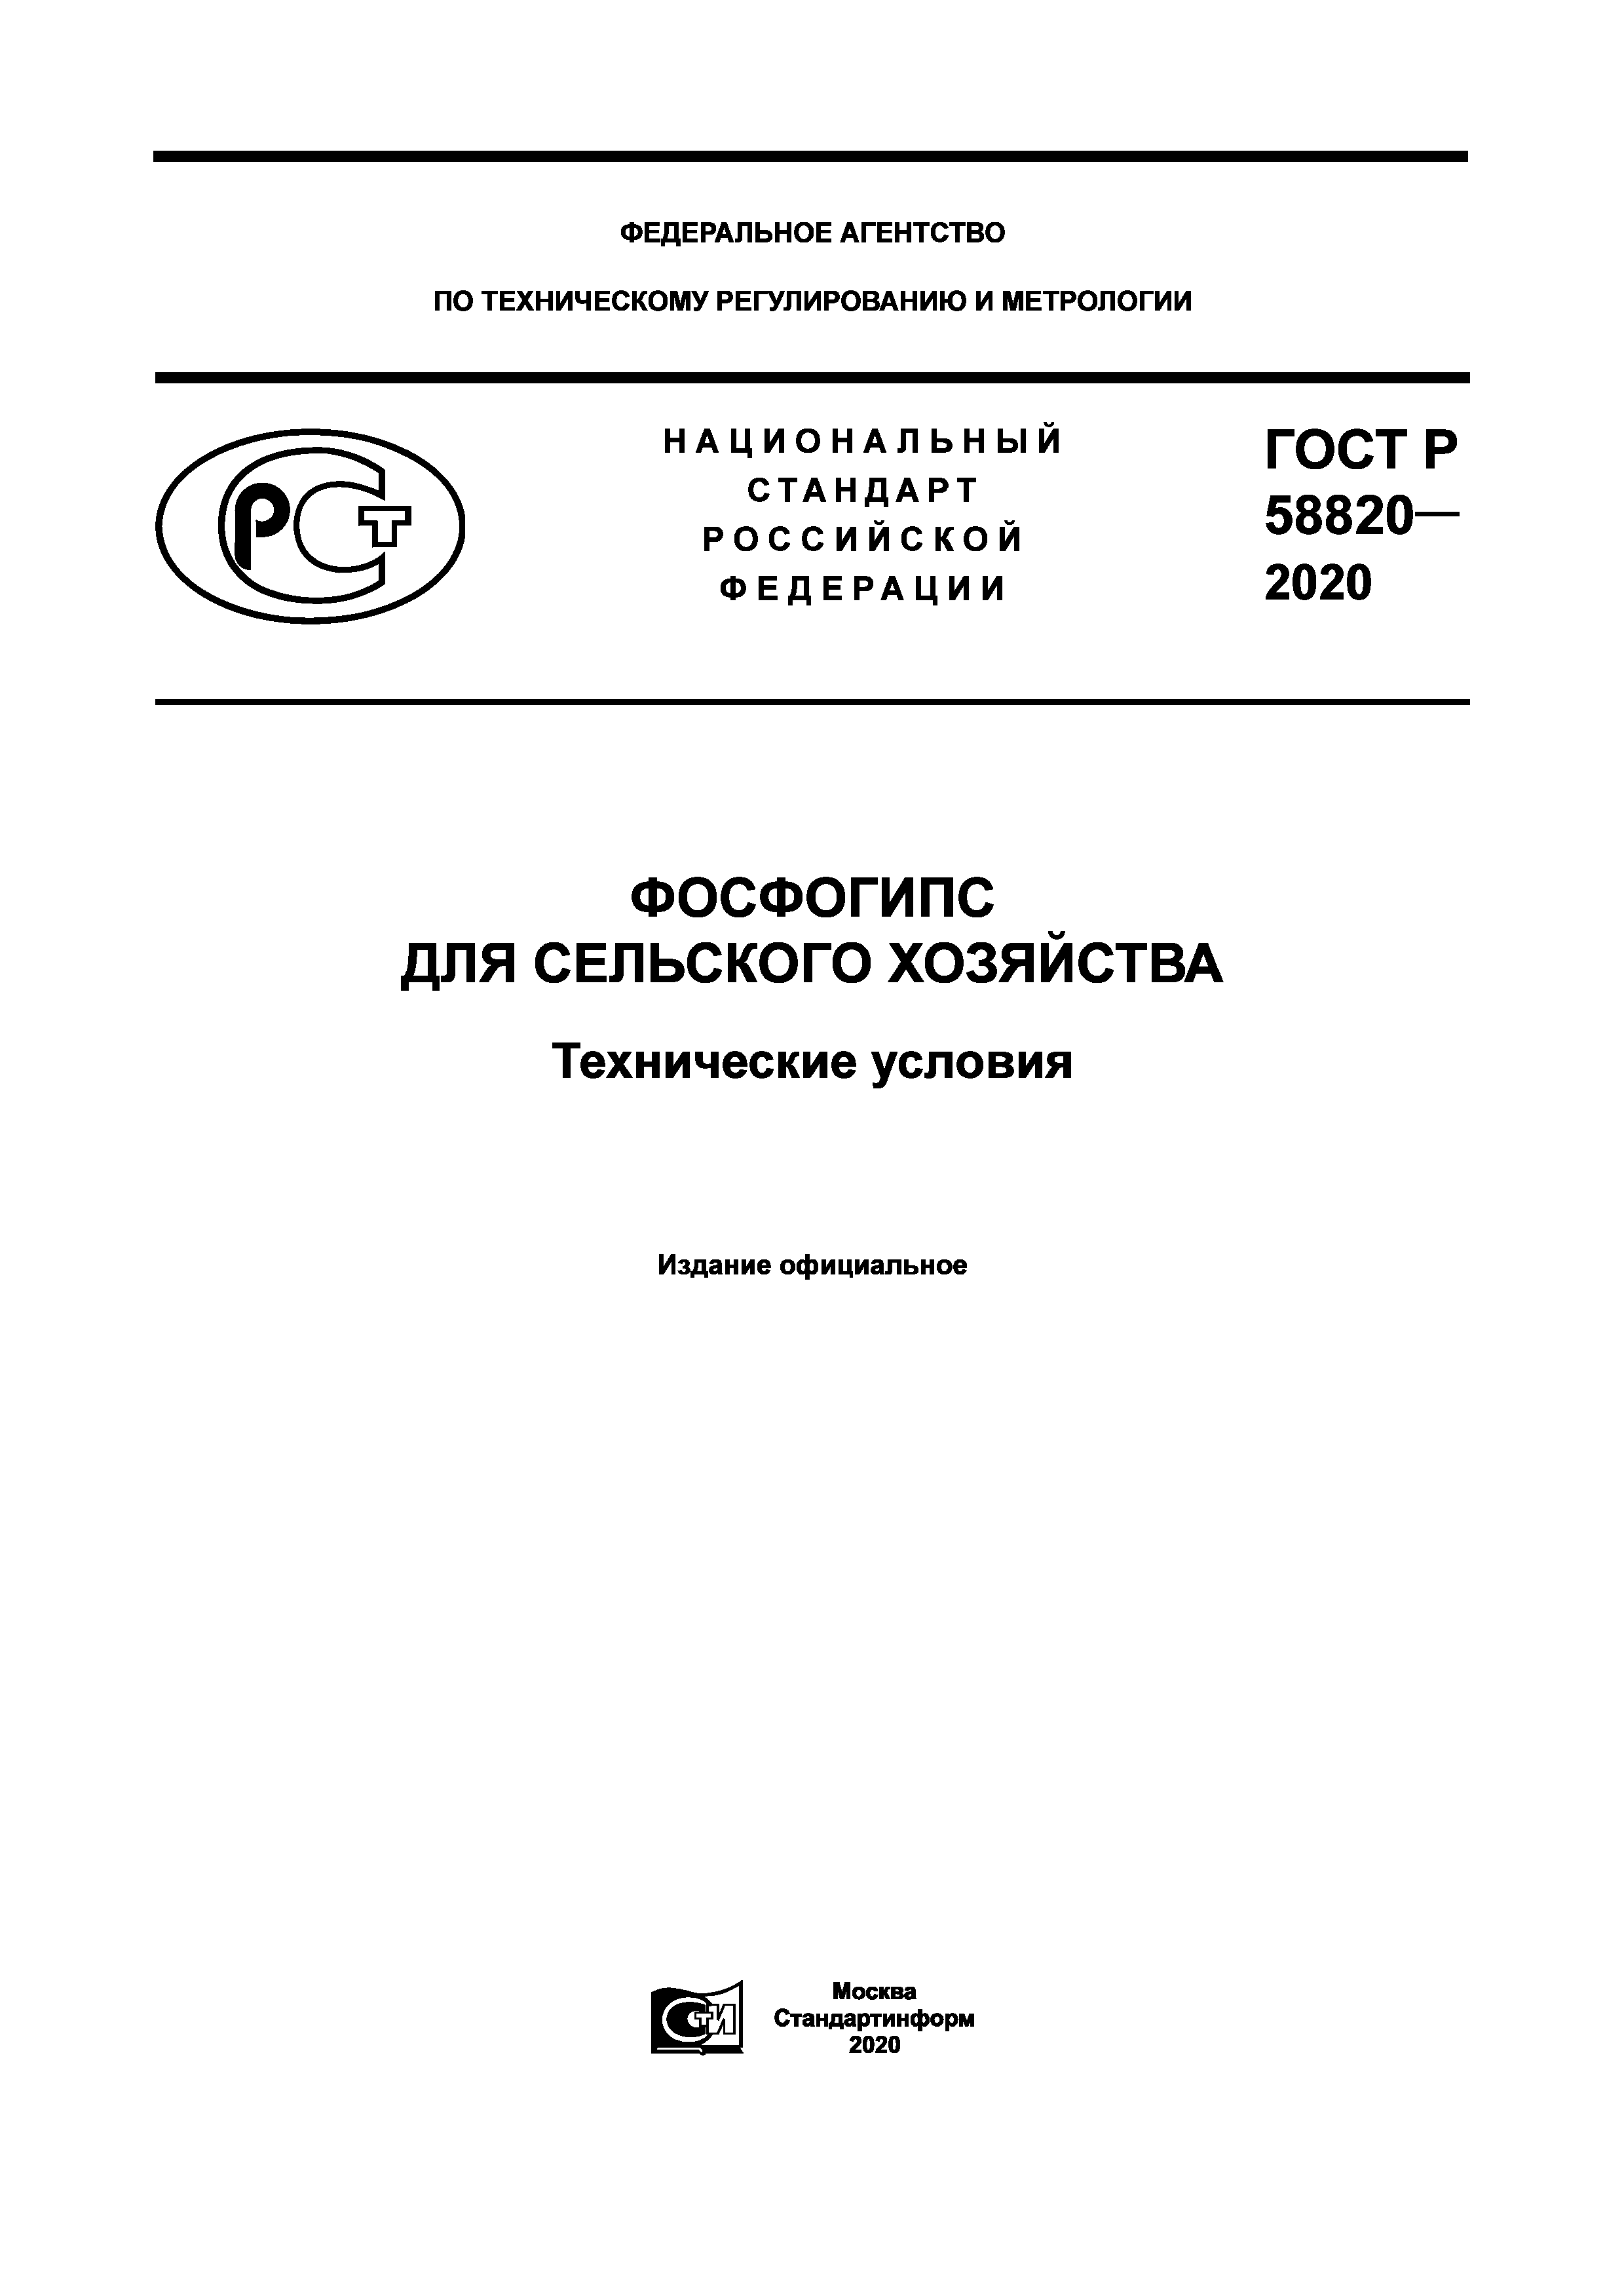 ГОСТ Р 58820-2020